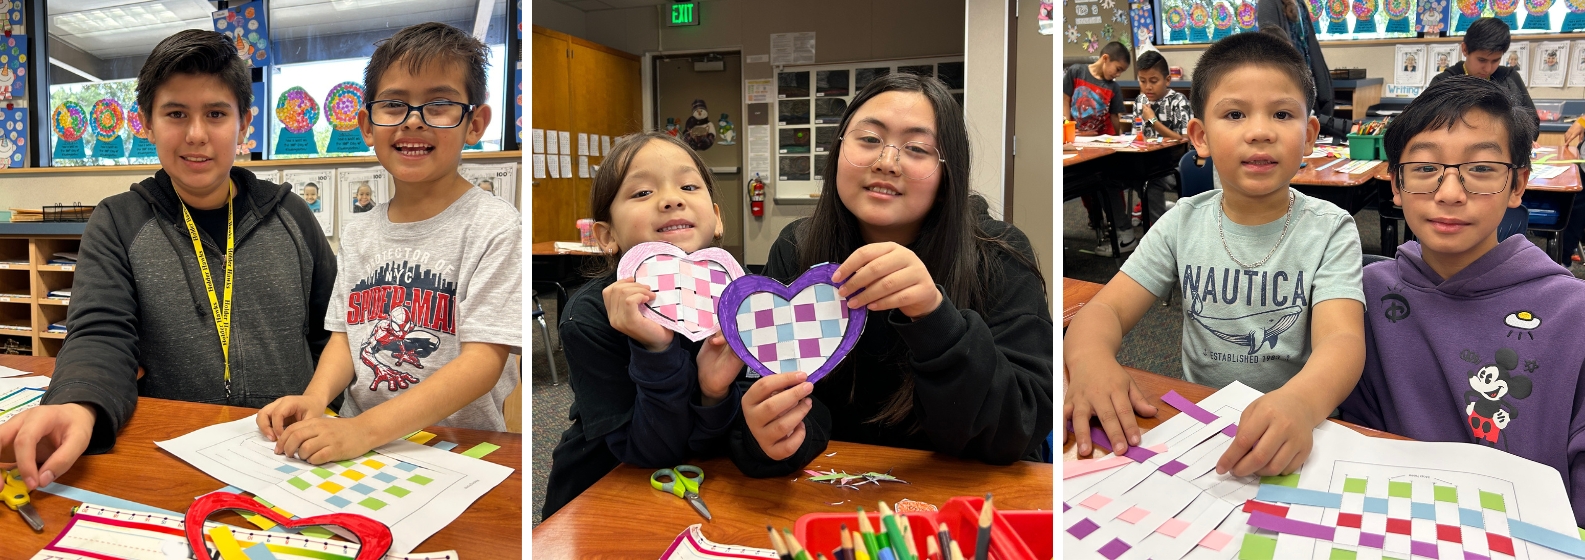 Kids working together to create valentine craft